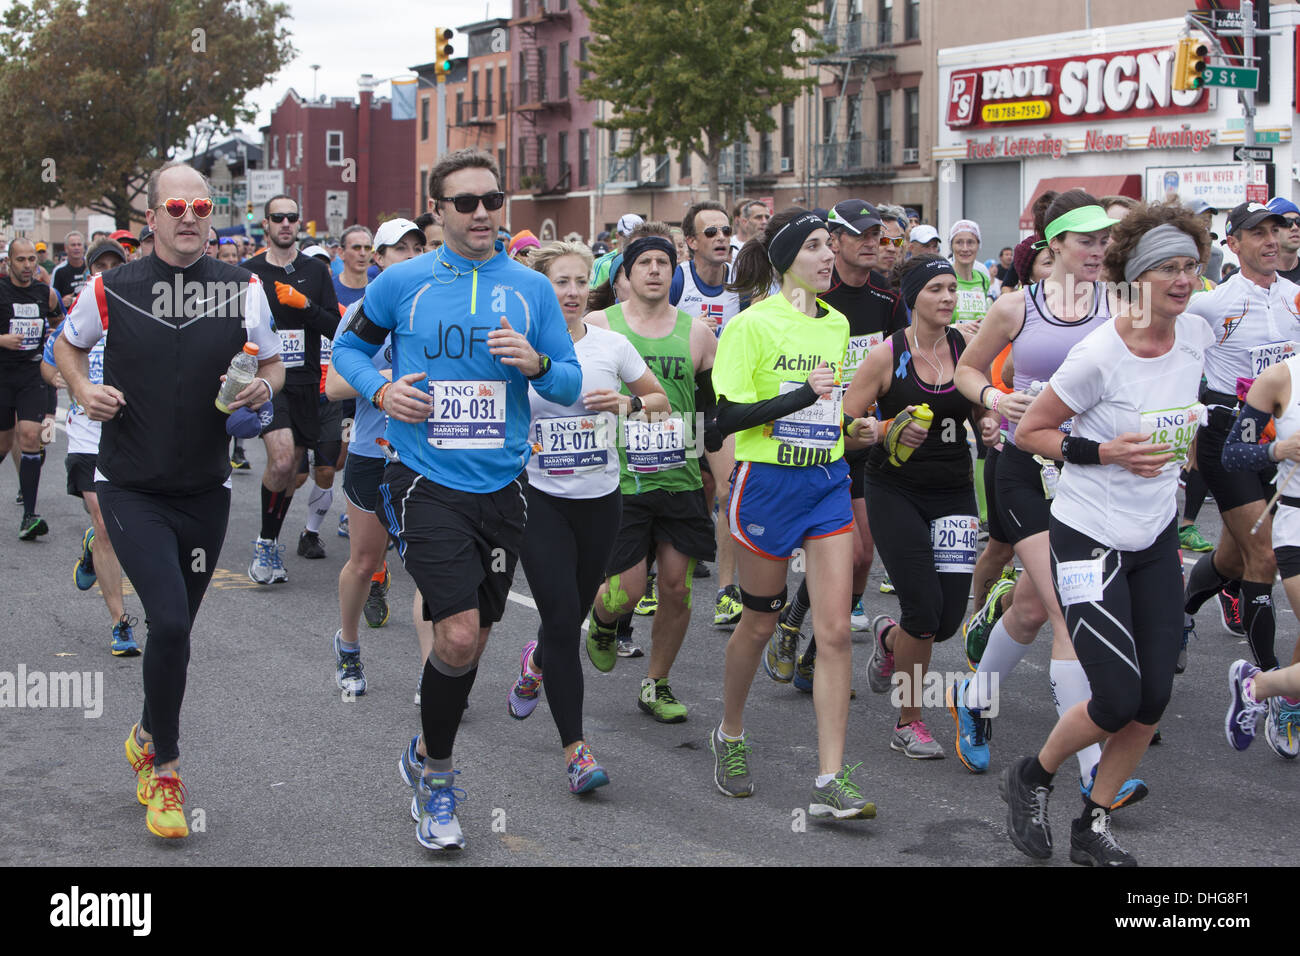 2013 New York City Marathon around the 6 mile (10K) point along 4th Ave. in Park Slope, Brooklyn, NY. Stock Photo